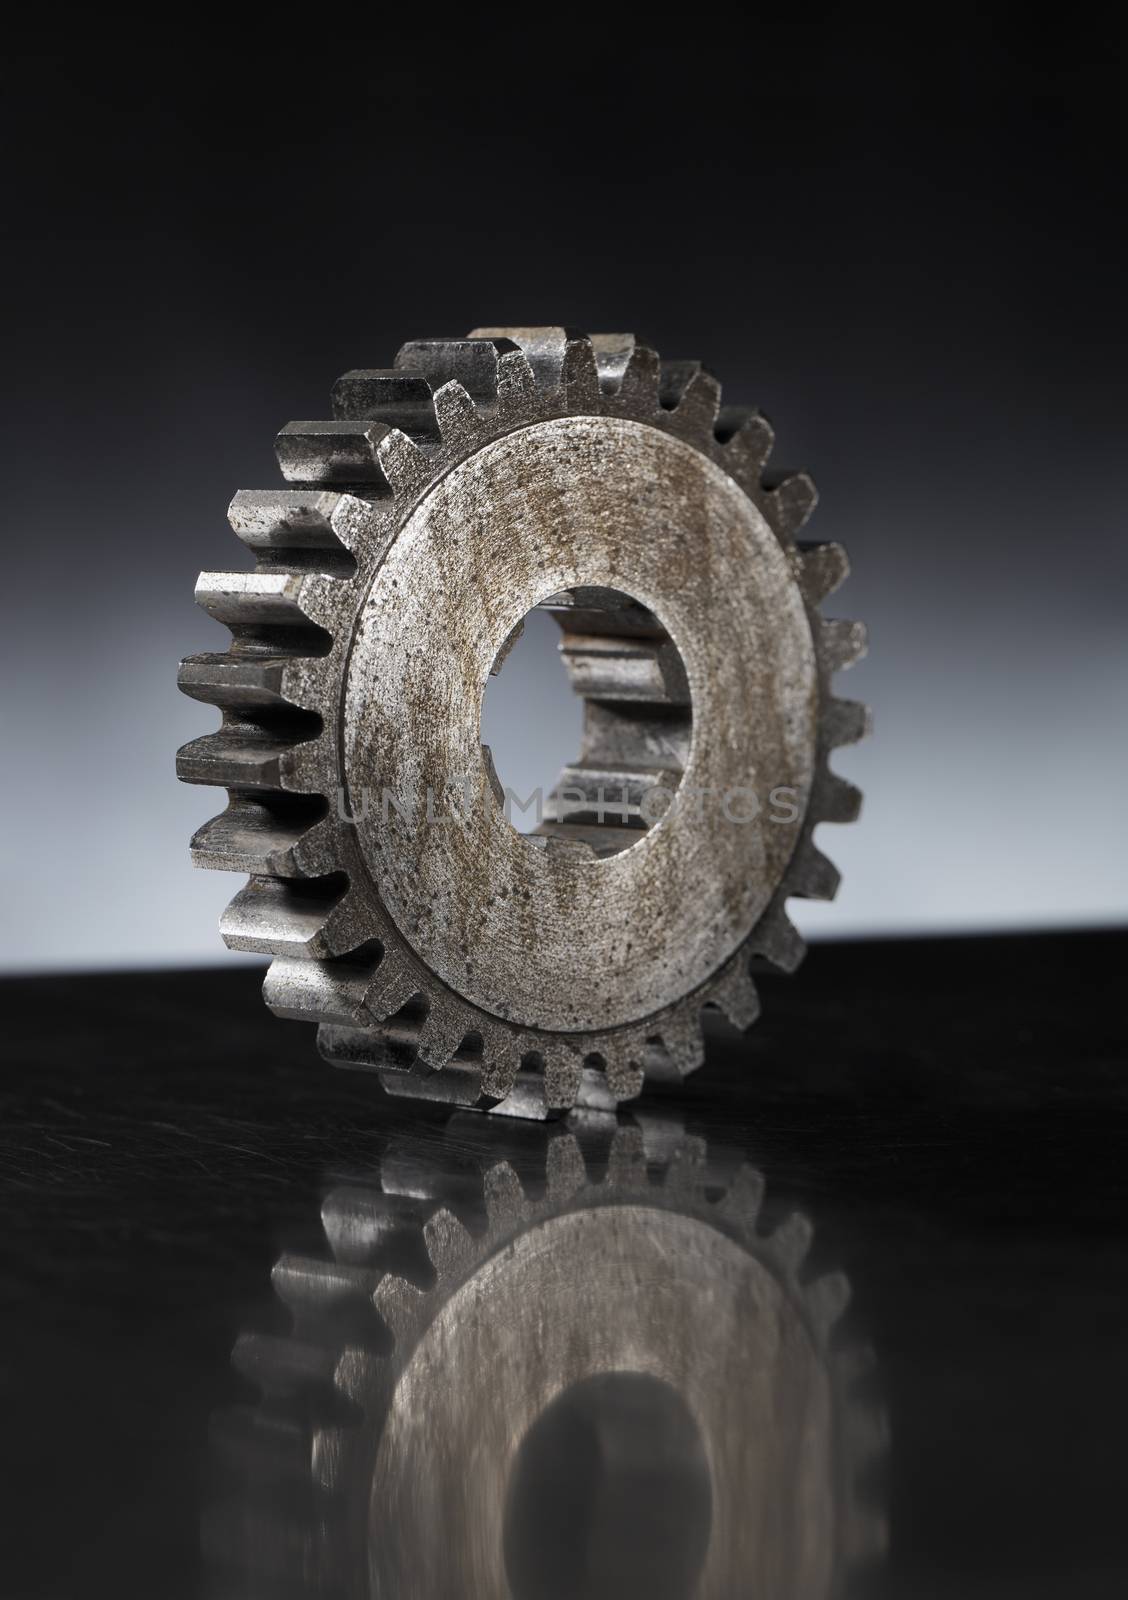 Old rusty cog gear wheel on metallic surface, Short depth-of-field